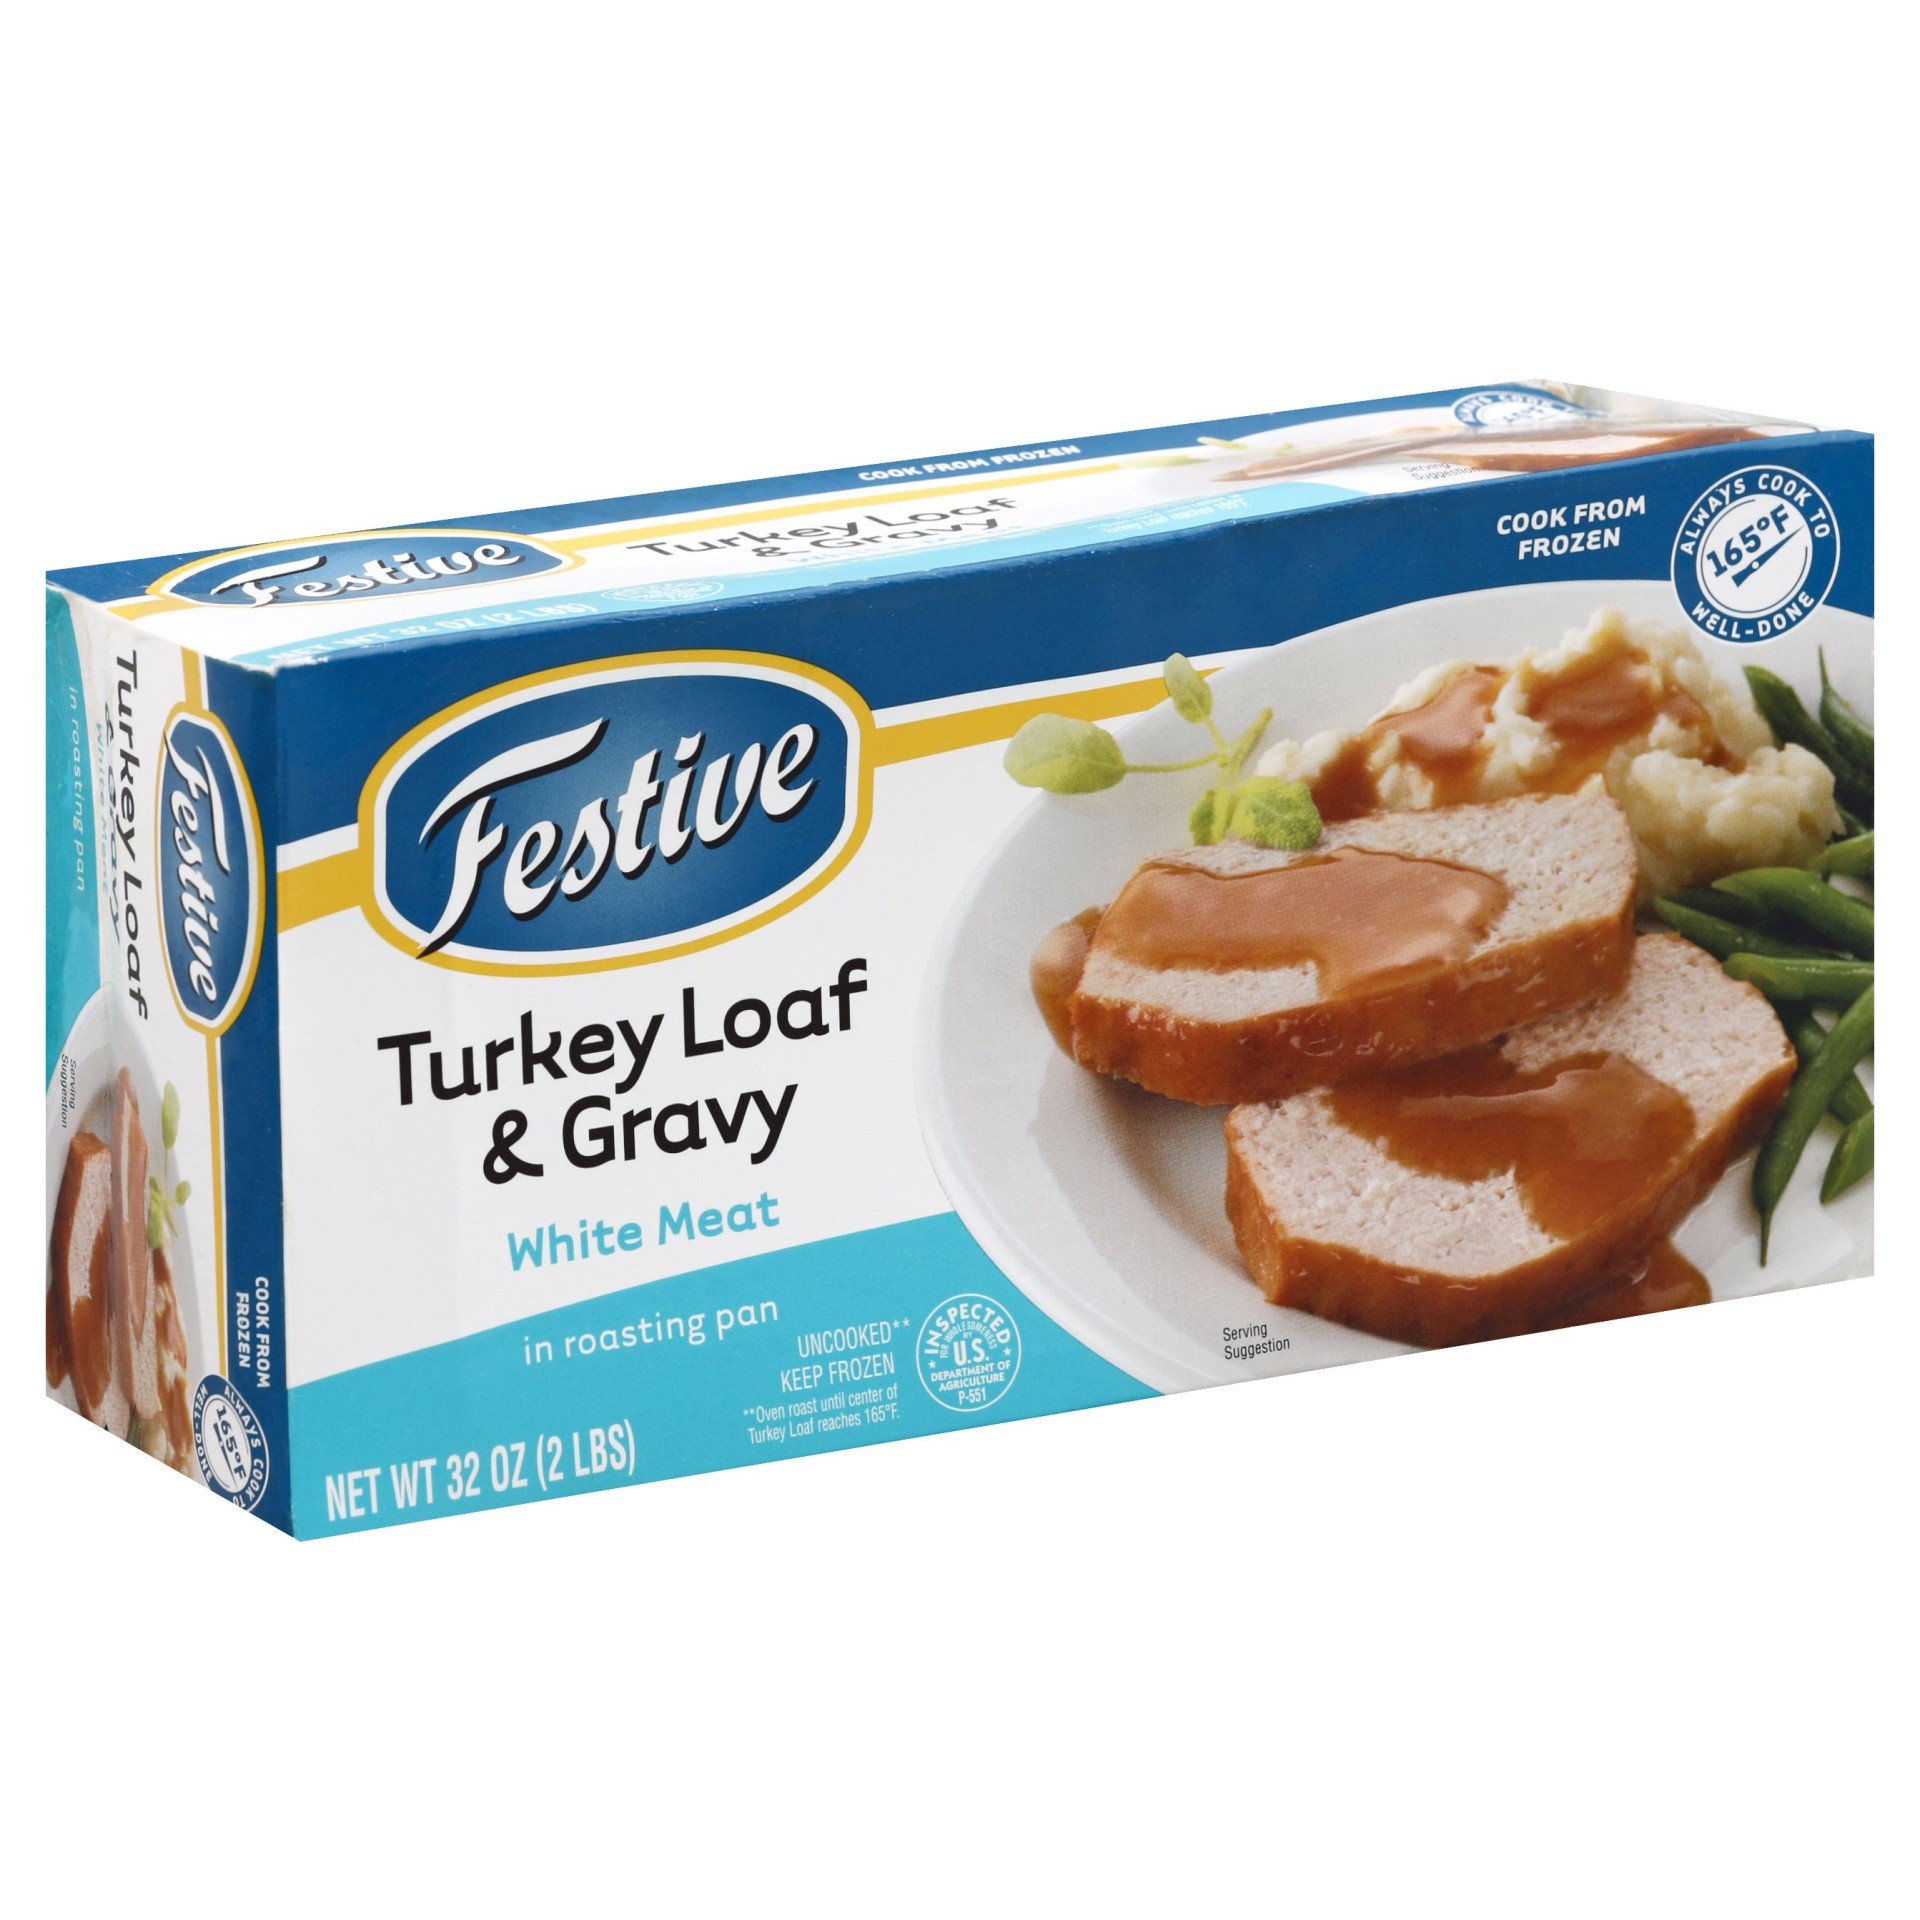 slide 1 of 9, Festive White Meat Turkey Loaf & Gravy in Roasting Pan 32 oz. Box, 32 oz